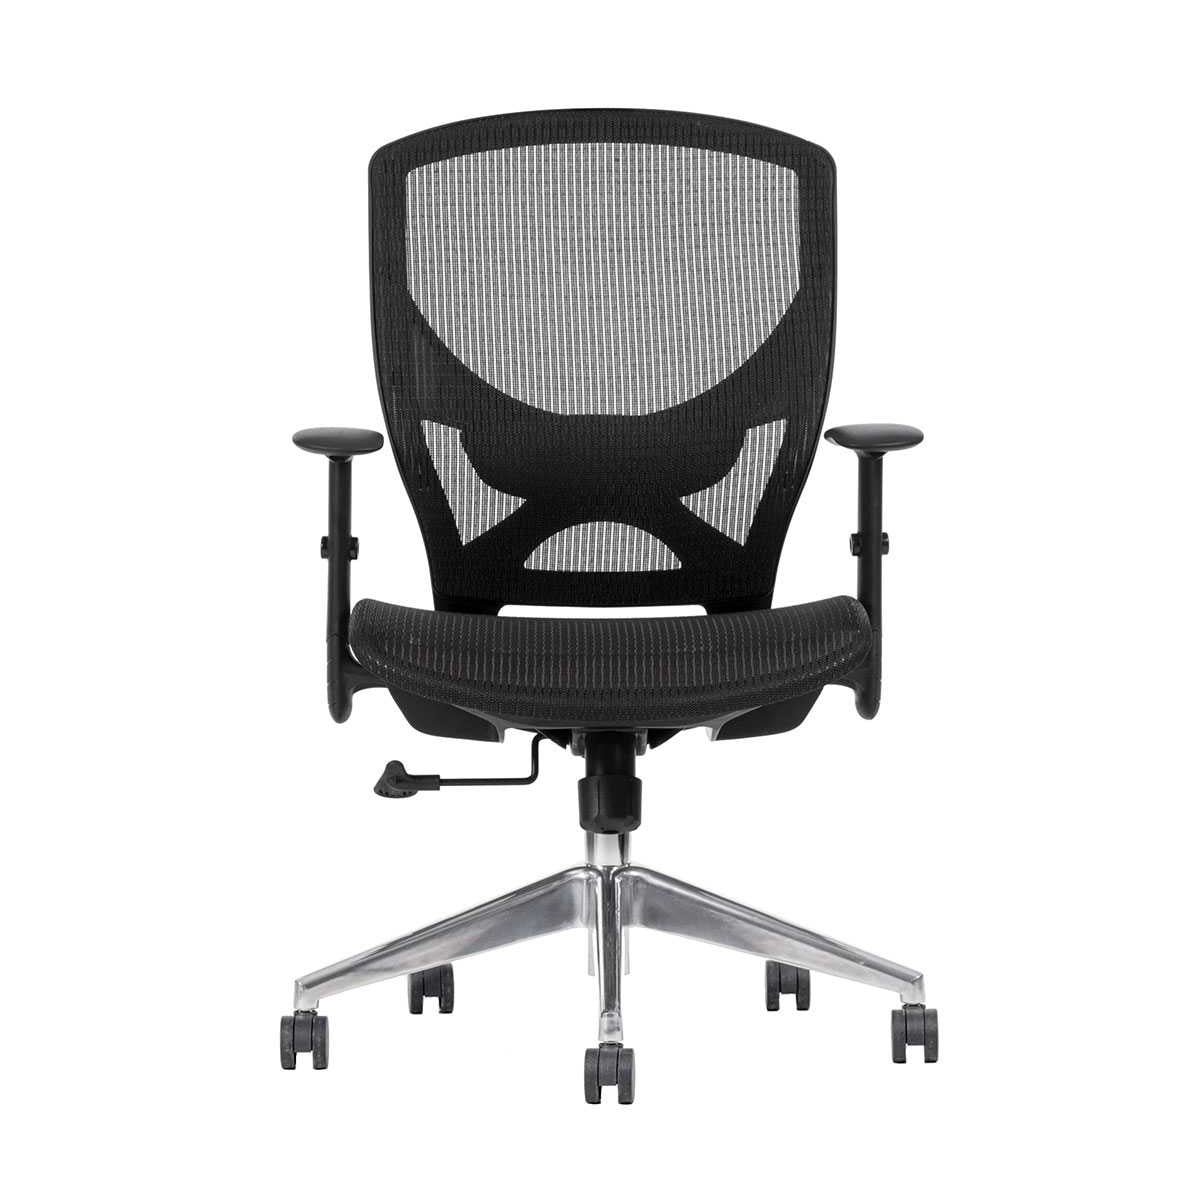 Sillón ejecutivo Matrix respaldo bajo y asiento tapizado en mesh con base aluminio